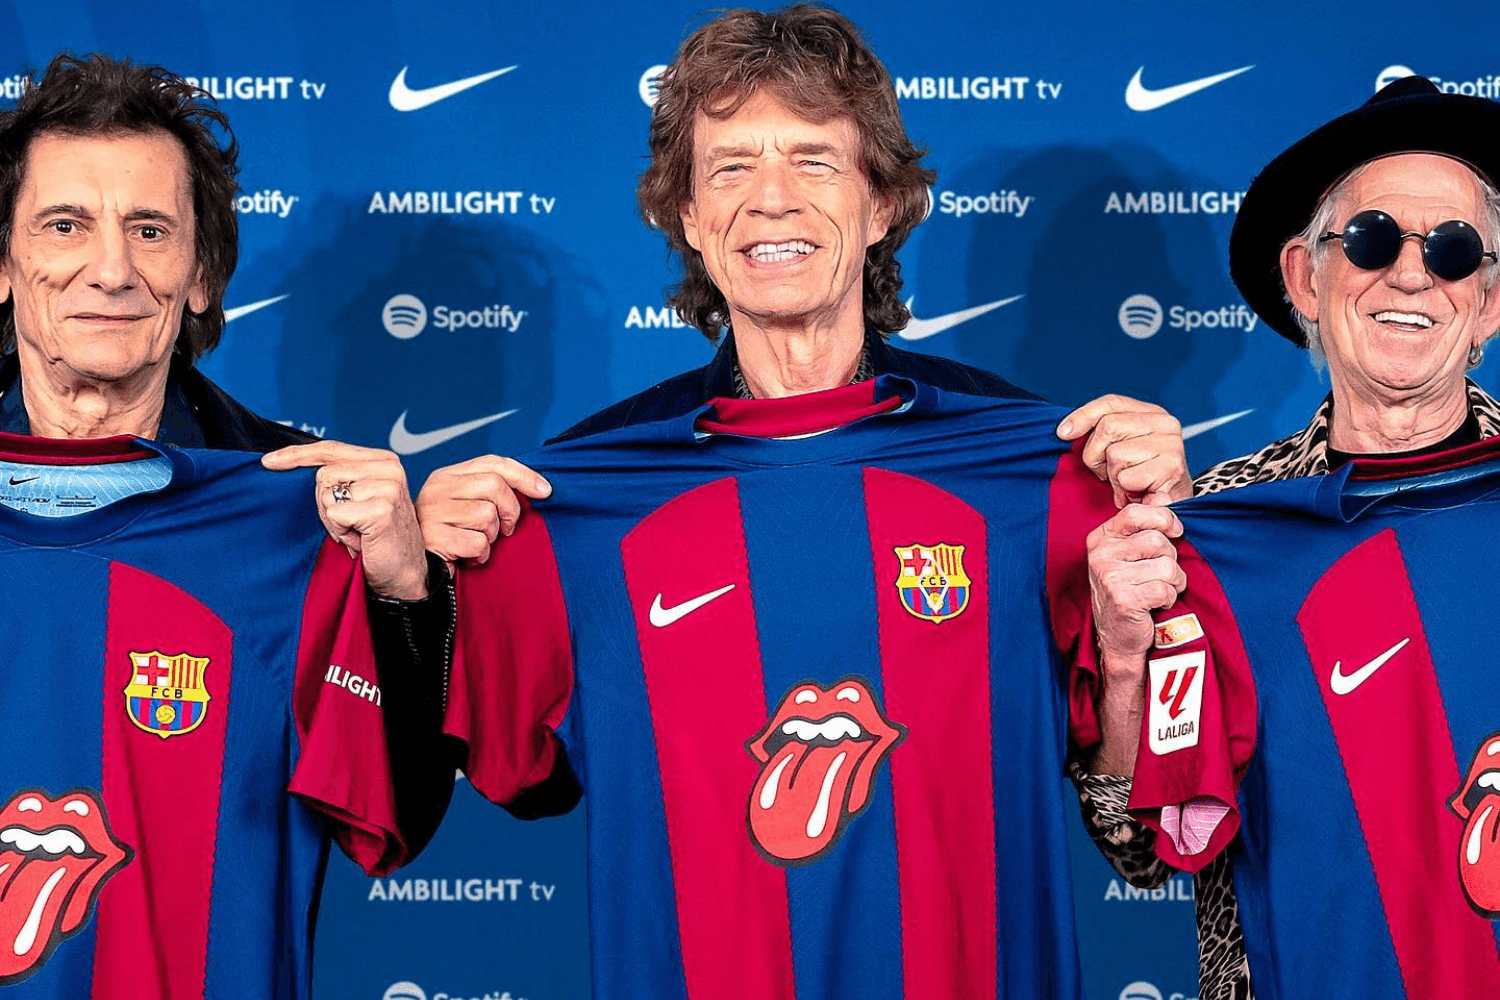 FC Barcelona trägt das Logo der Rolling Stones während des El Clásico auf dem Trikot